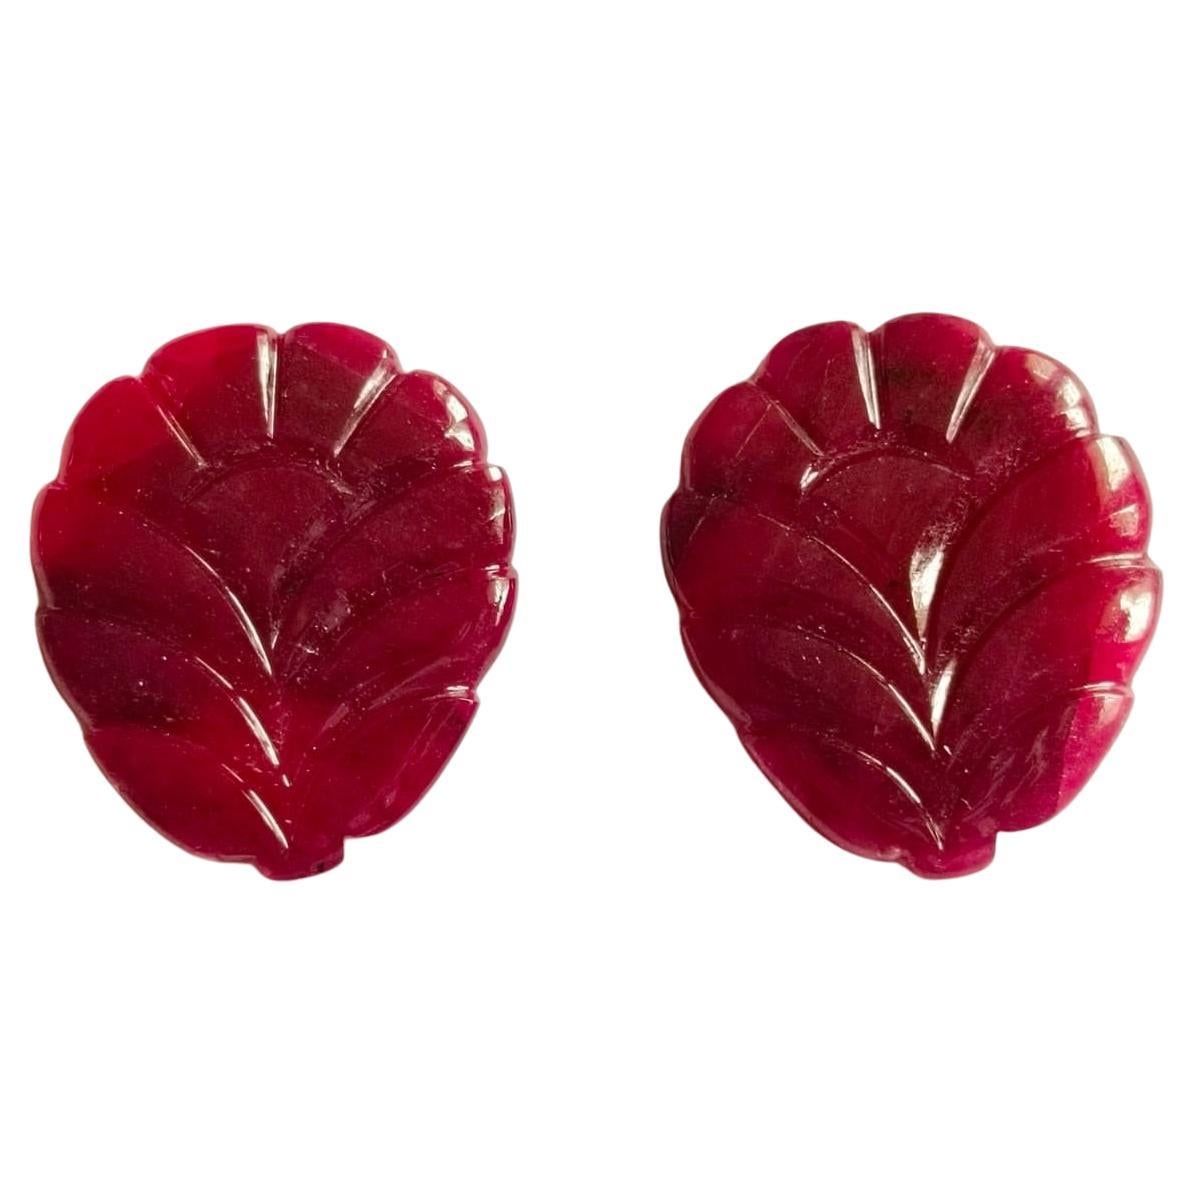 25.14 Carat Ruby Carving Leaf Shape Pair Loose Gemstone For Sale